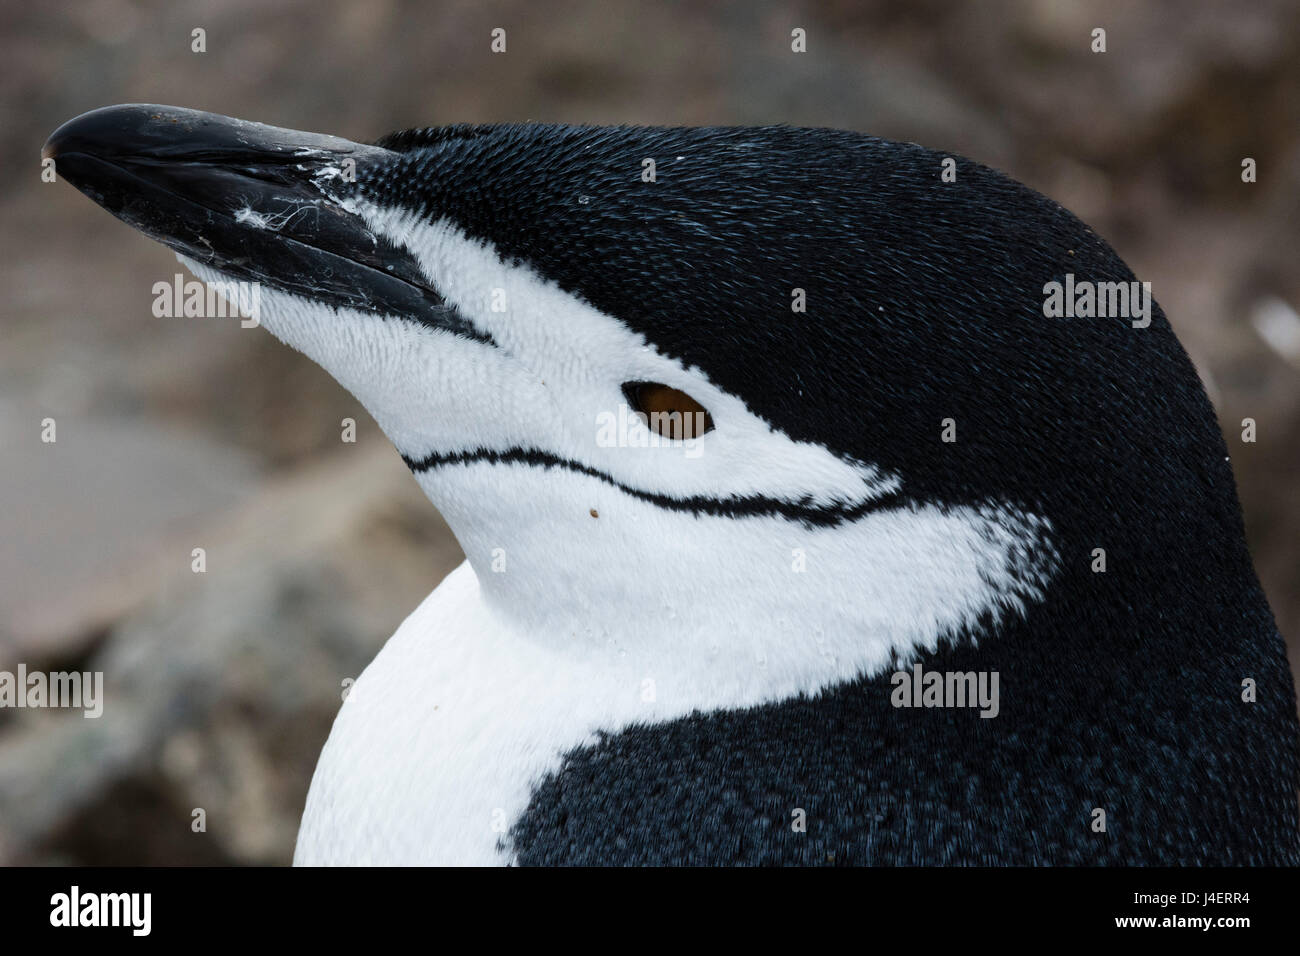 Porträt eines Pinguins Zügelpinguinen (Pygoscelis Antarcticus), großaufnahme Half Moon Island, Antarktis, Polarregionen Stockfoto